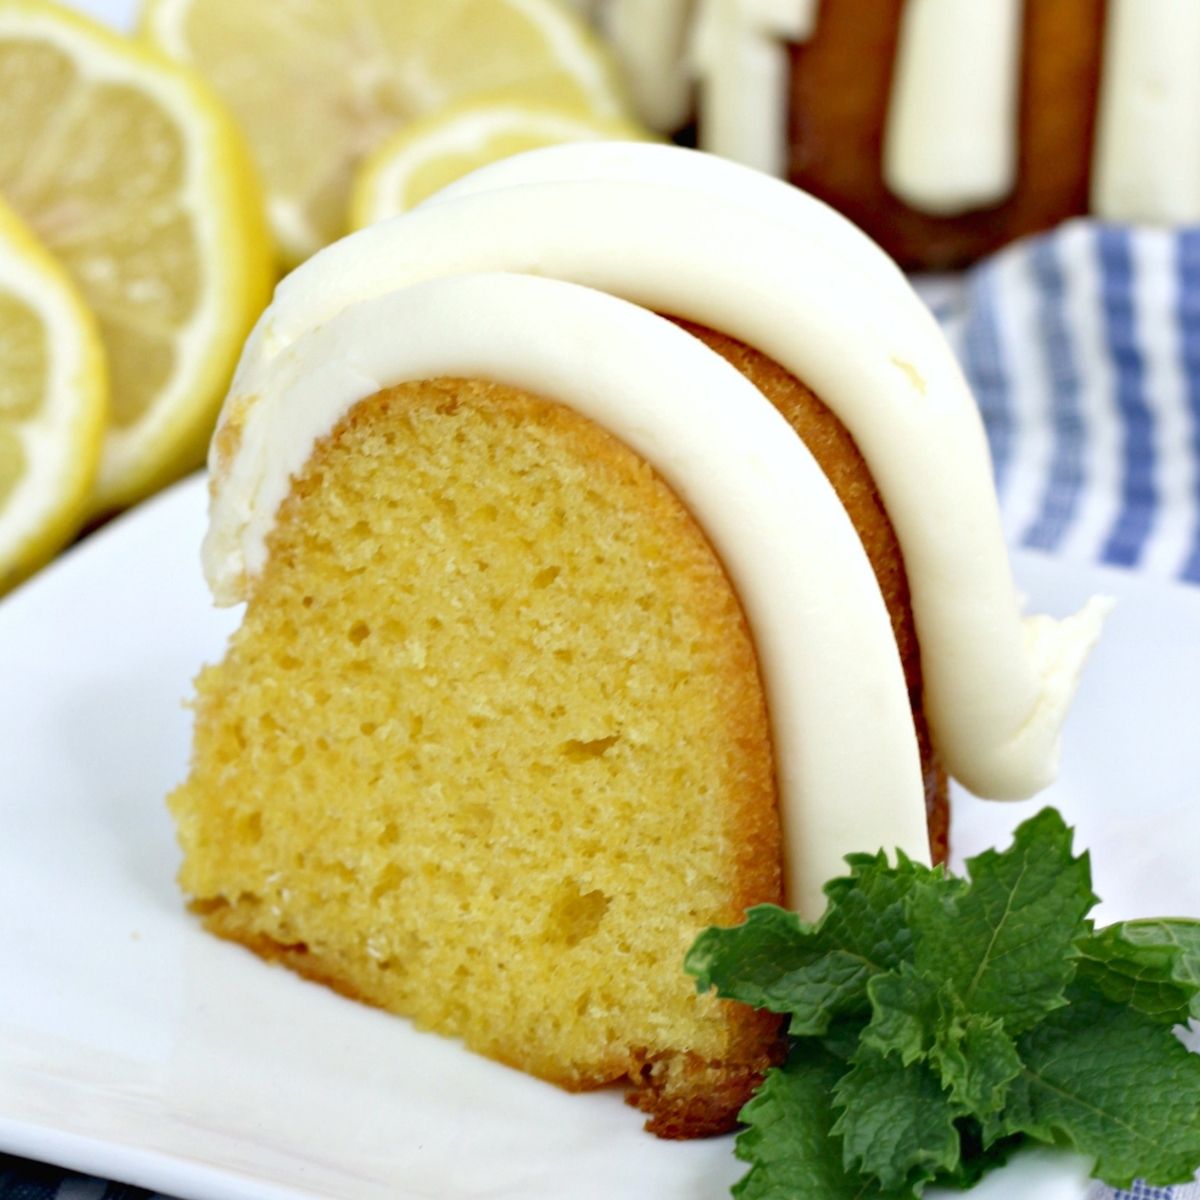 https://balancingmotherhood.com/wp-content/uploads/2022/03/lemon-nothing-bundt-cake-recipe.jpg